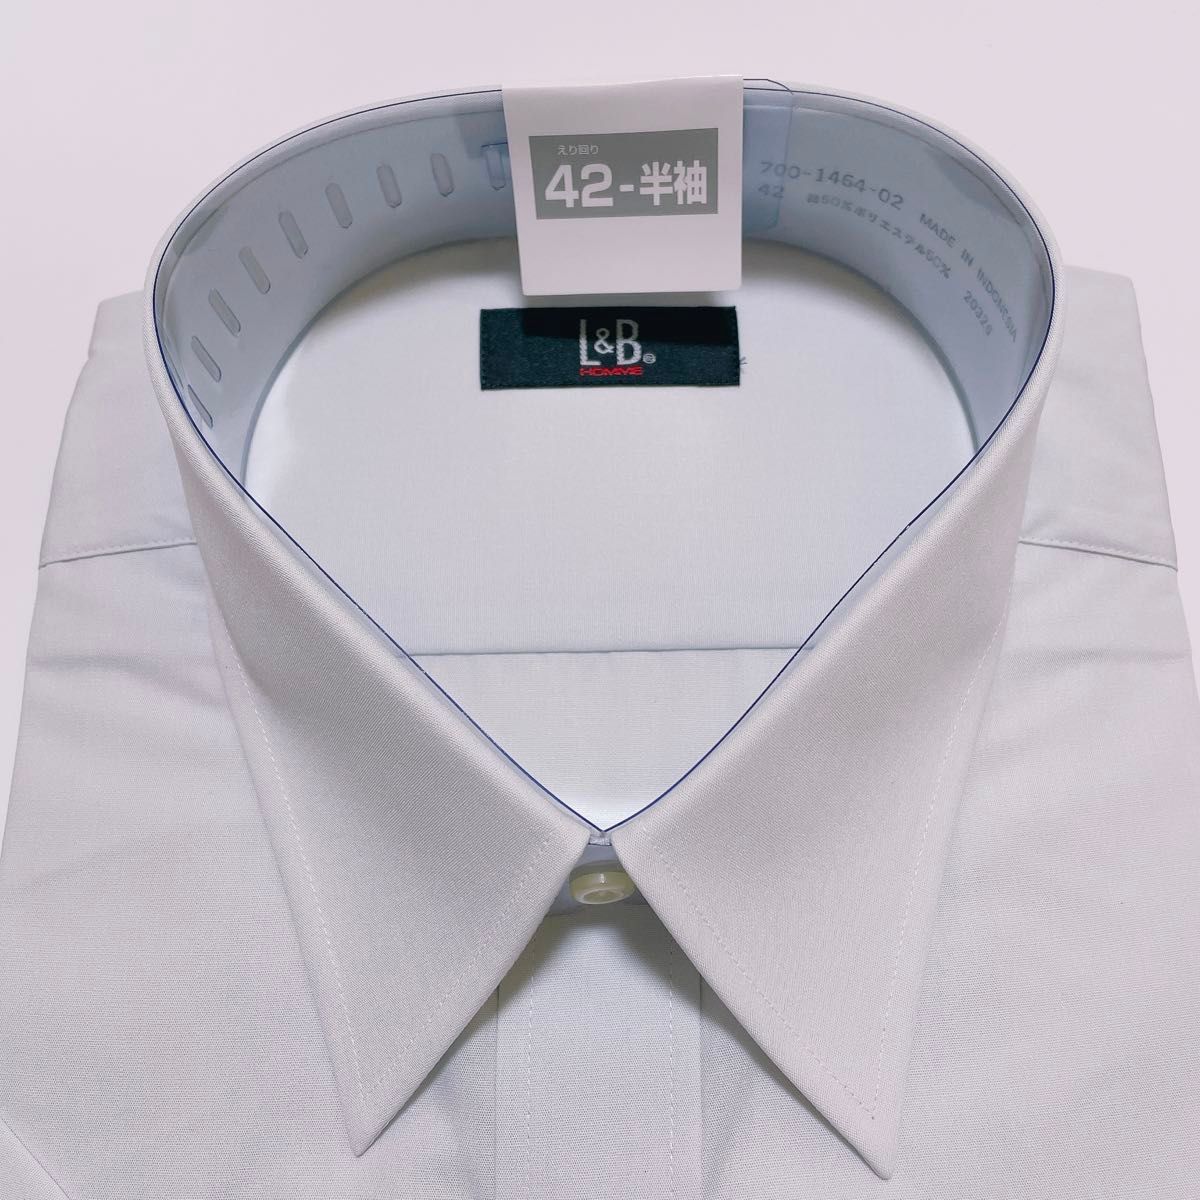 L&B HOMME 綿高率　形態安定　半袖ワイシャツ　L-42 吸水速乾　グレー